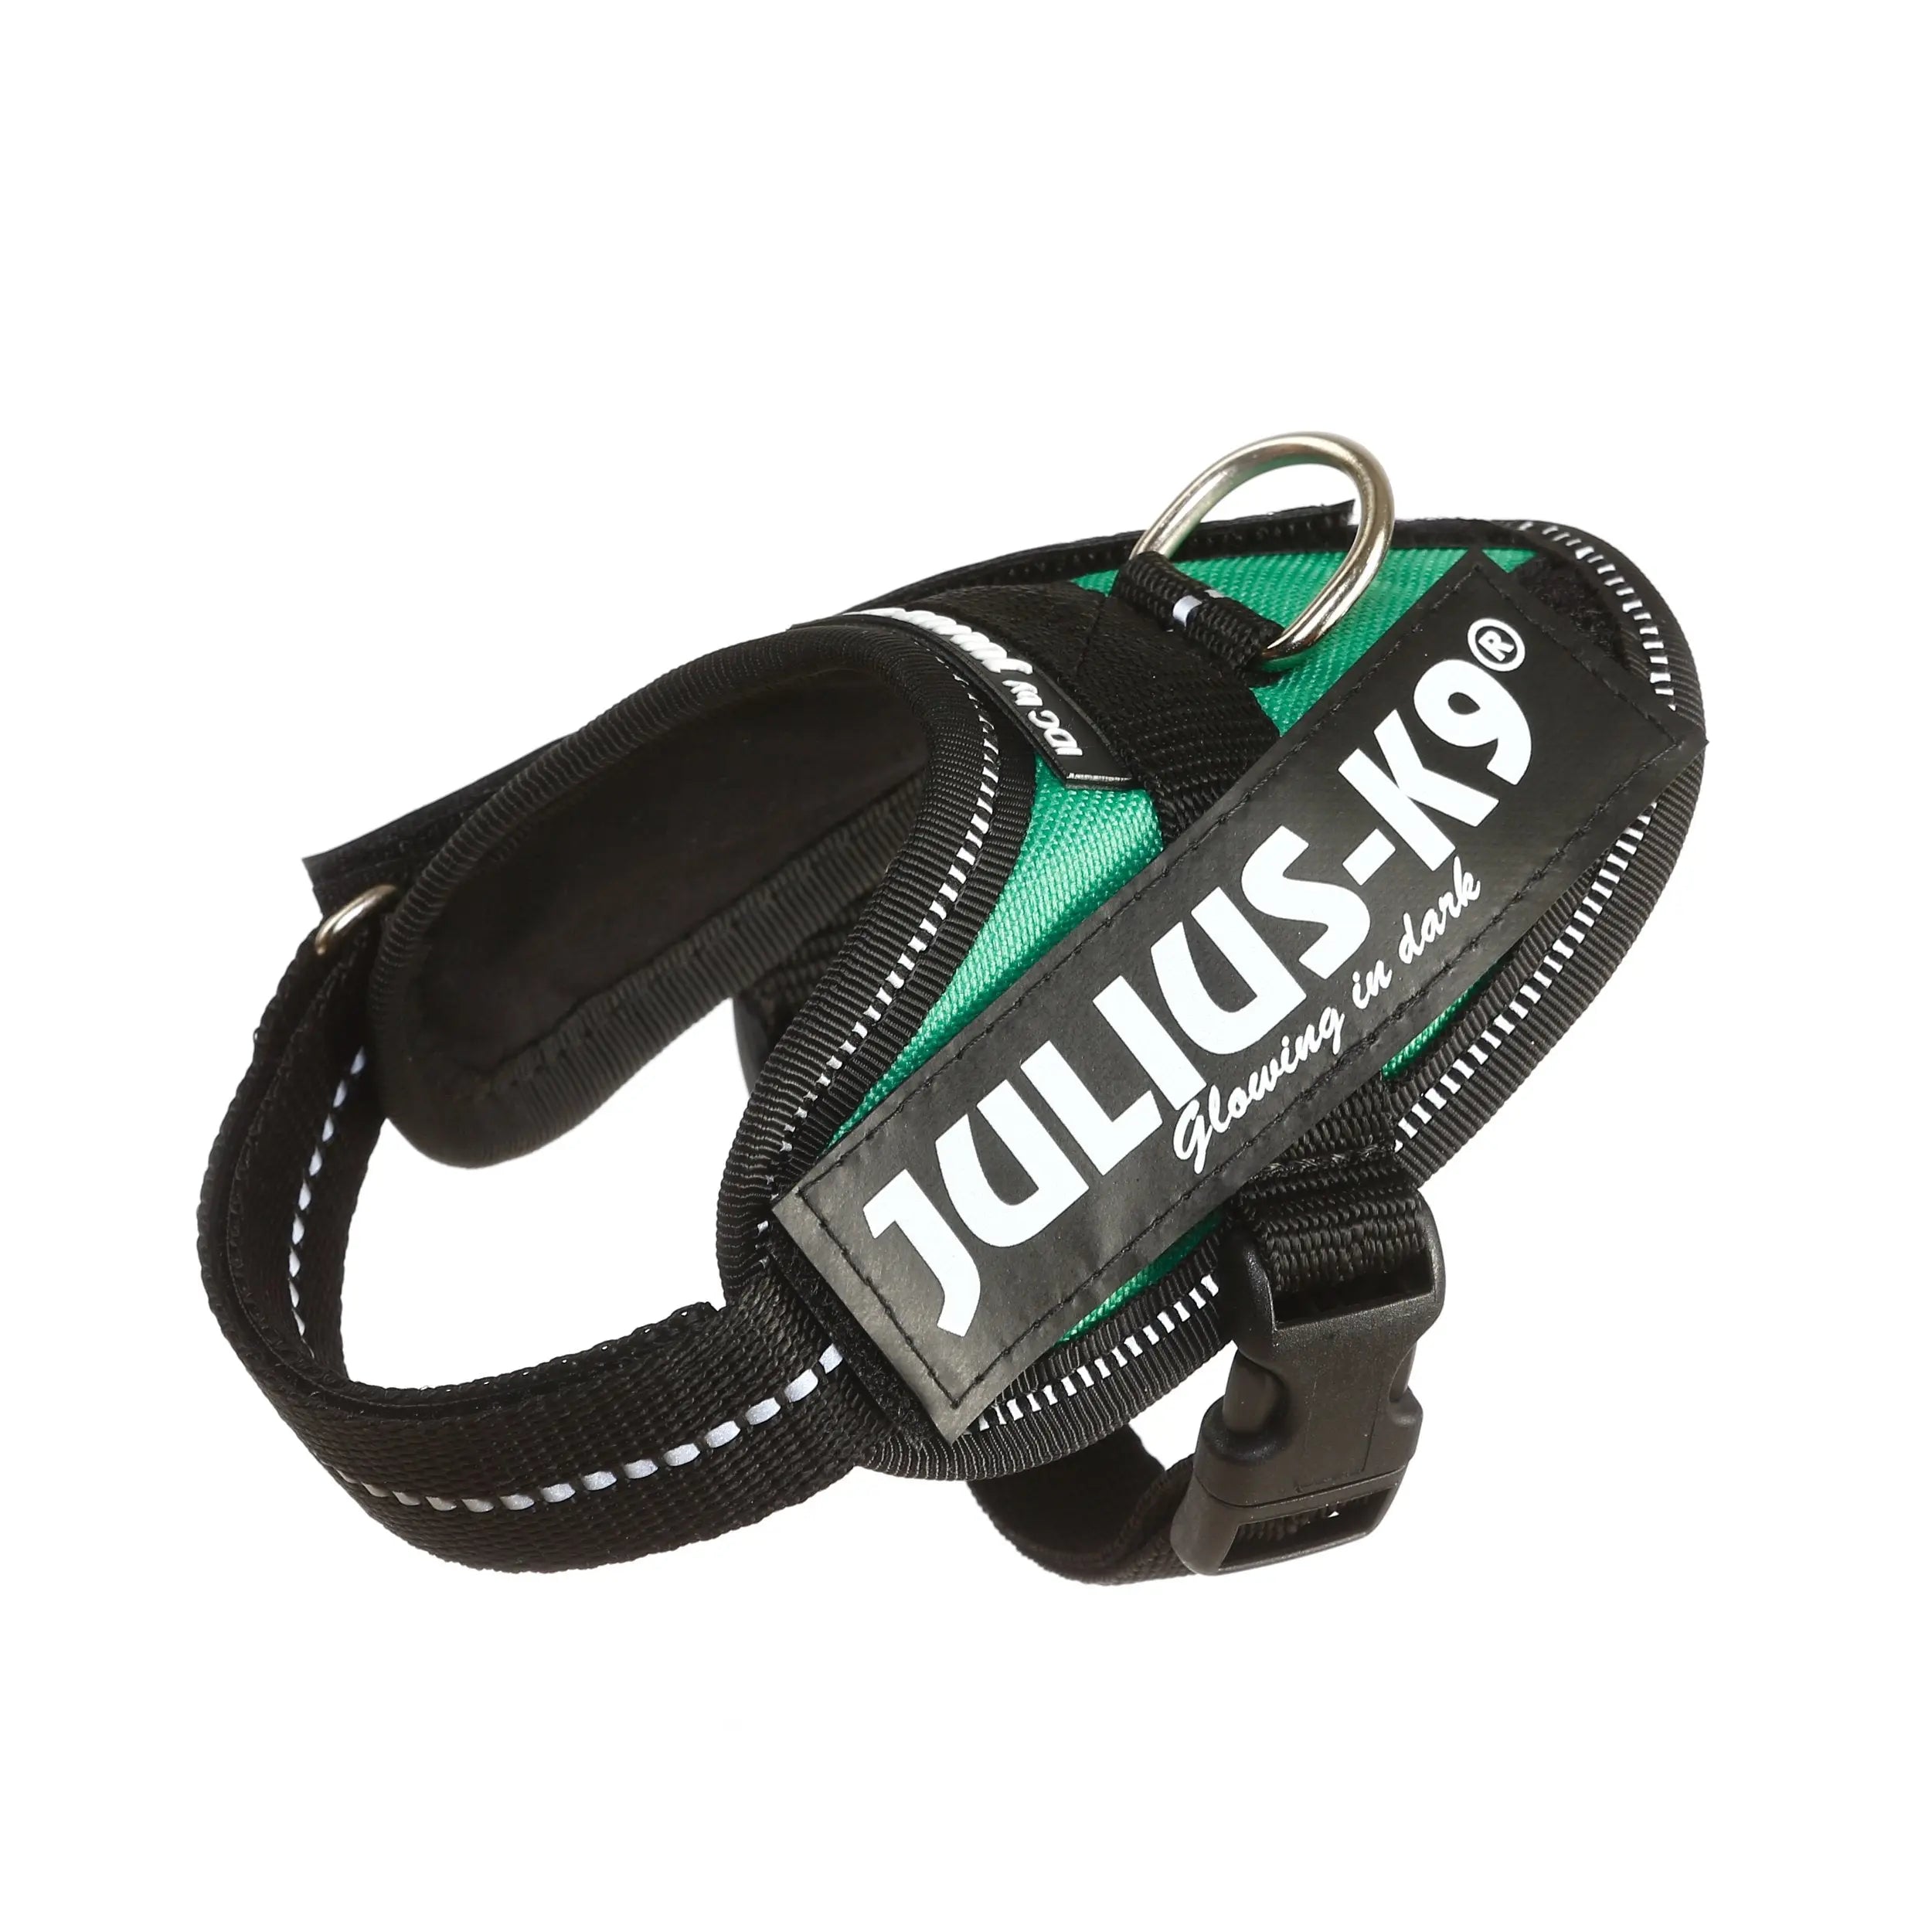 JULIUS-K9 IDC Powerharness Nylon Reflective No Pull Dog Harness